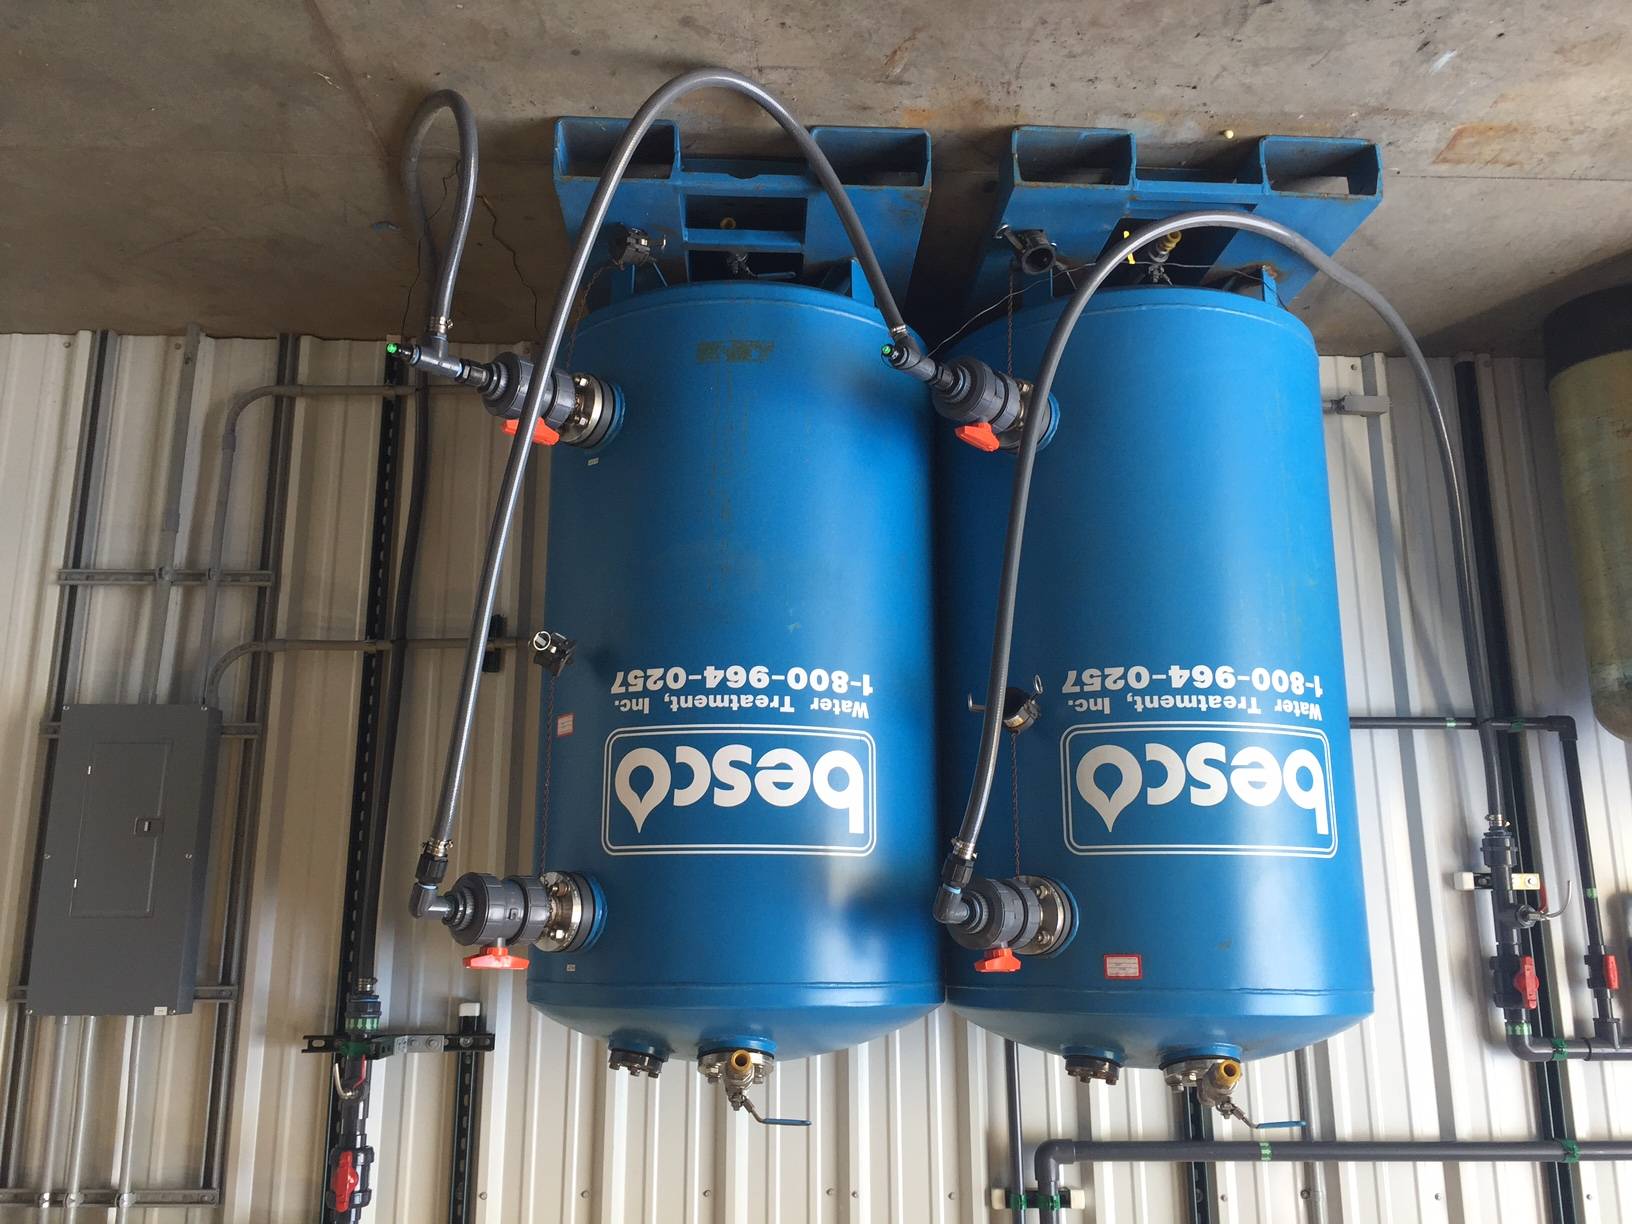 Besco branded water tanks